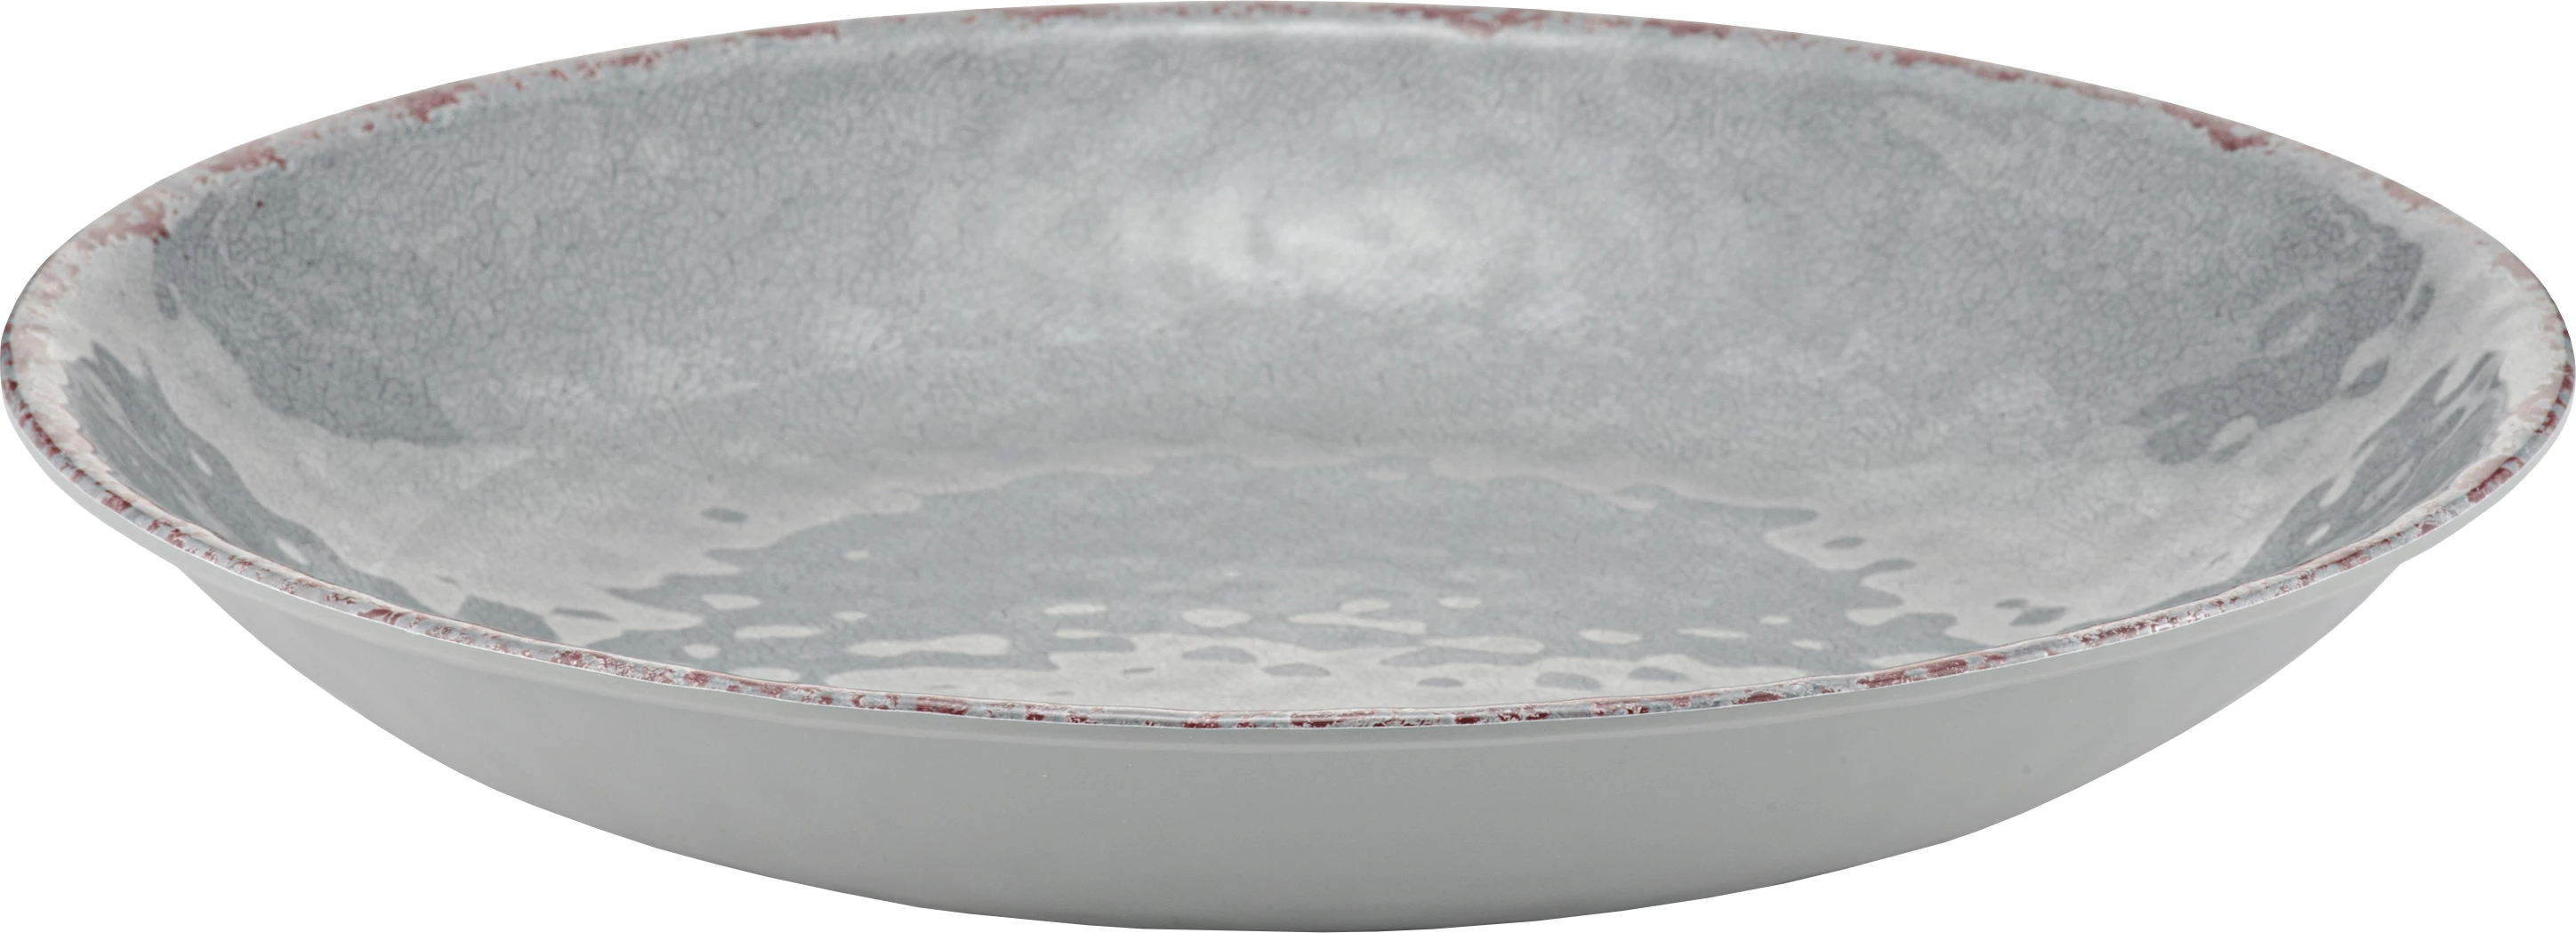 Dalebrook Casablanca skål, grå, 600 cl, ø42 cm